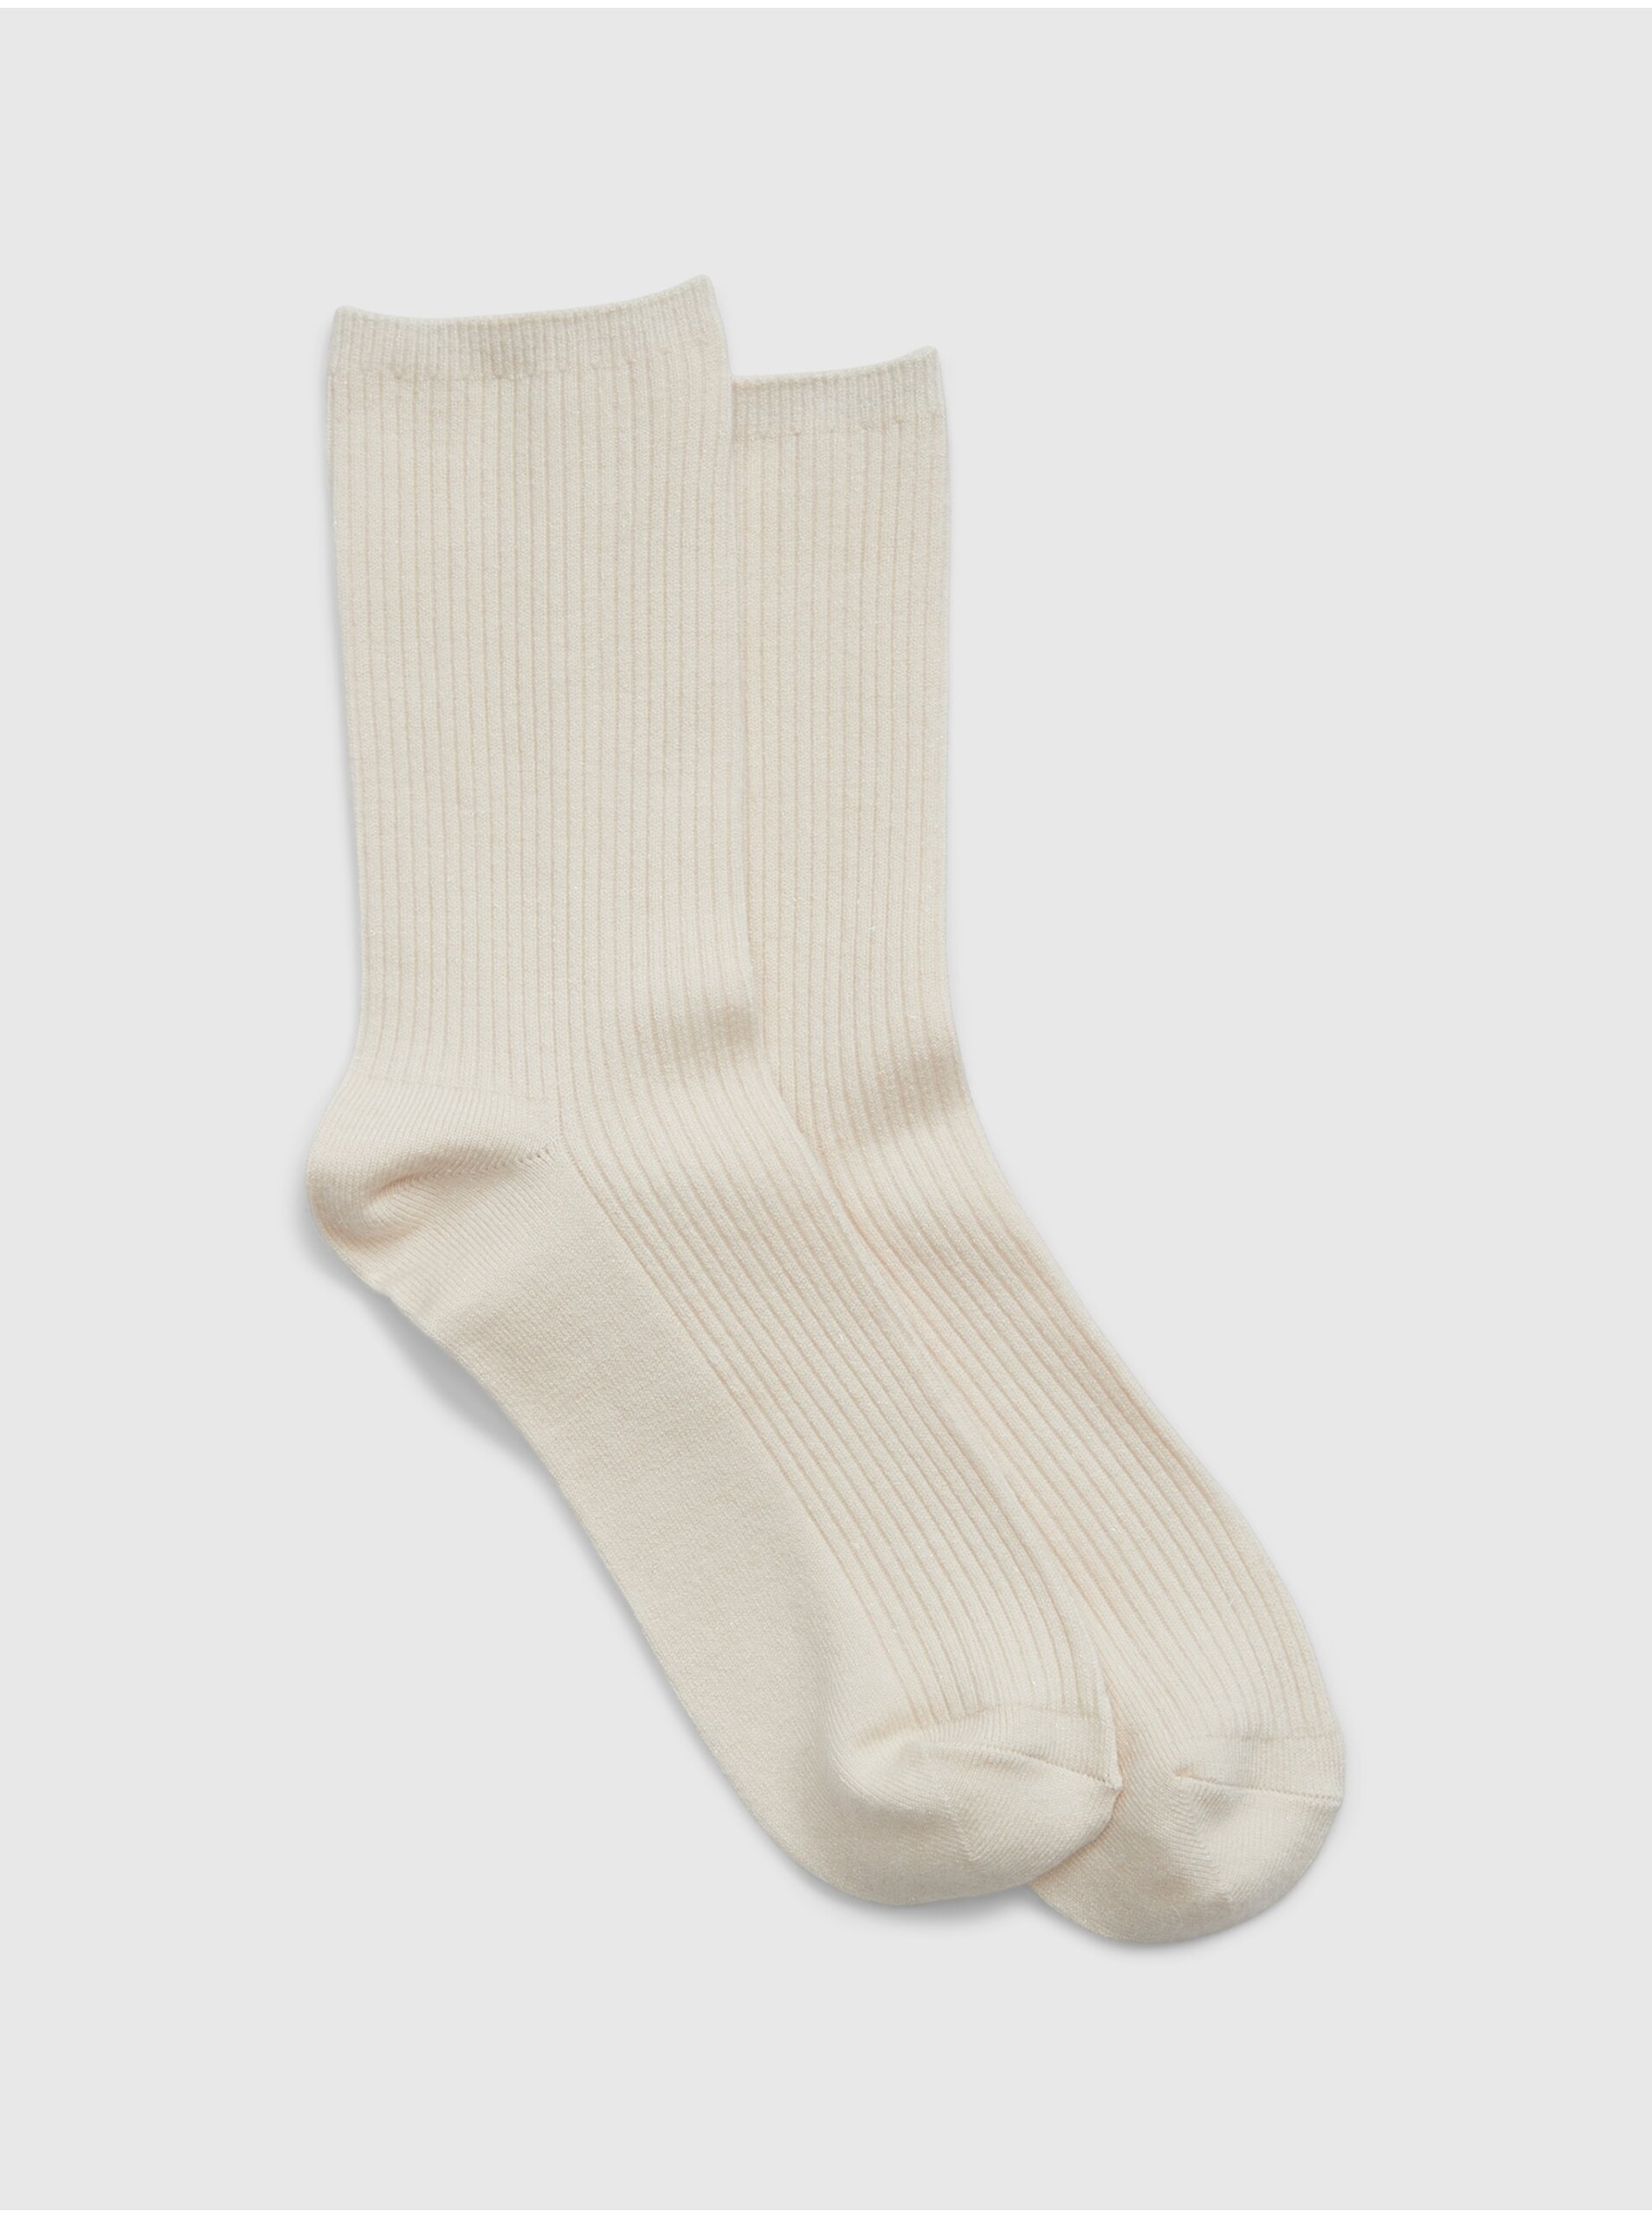 Lacno Krémové dámske ponožky Gap